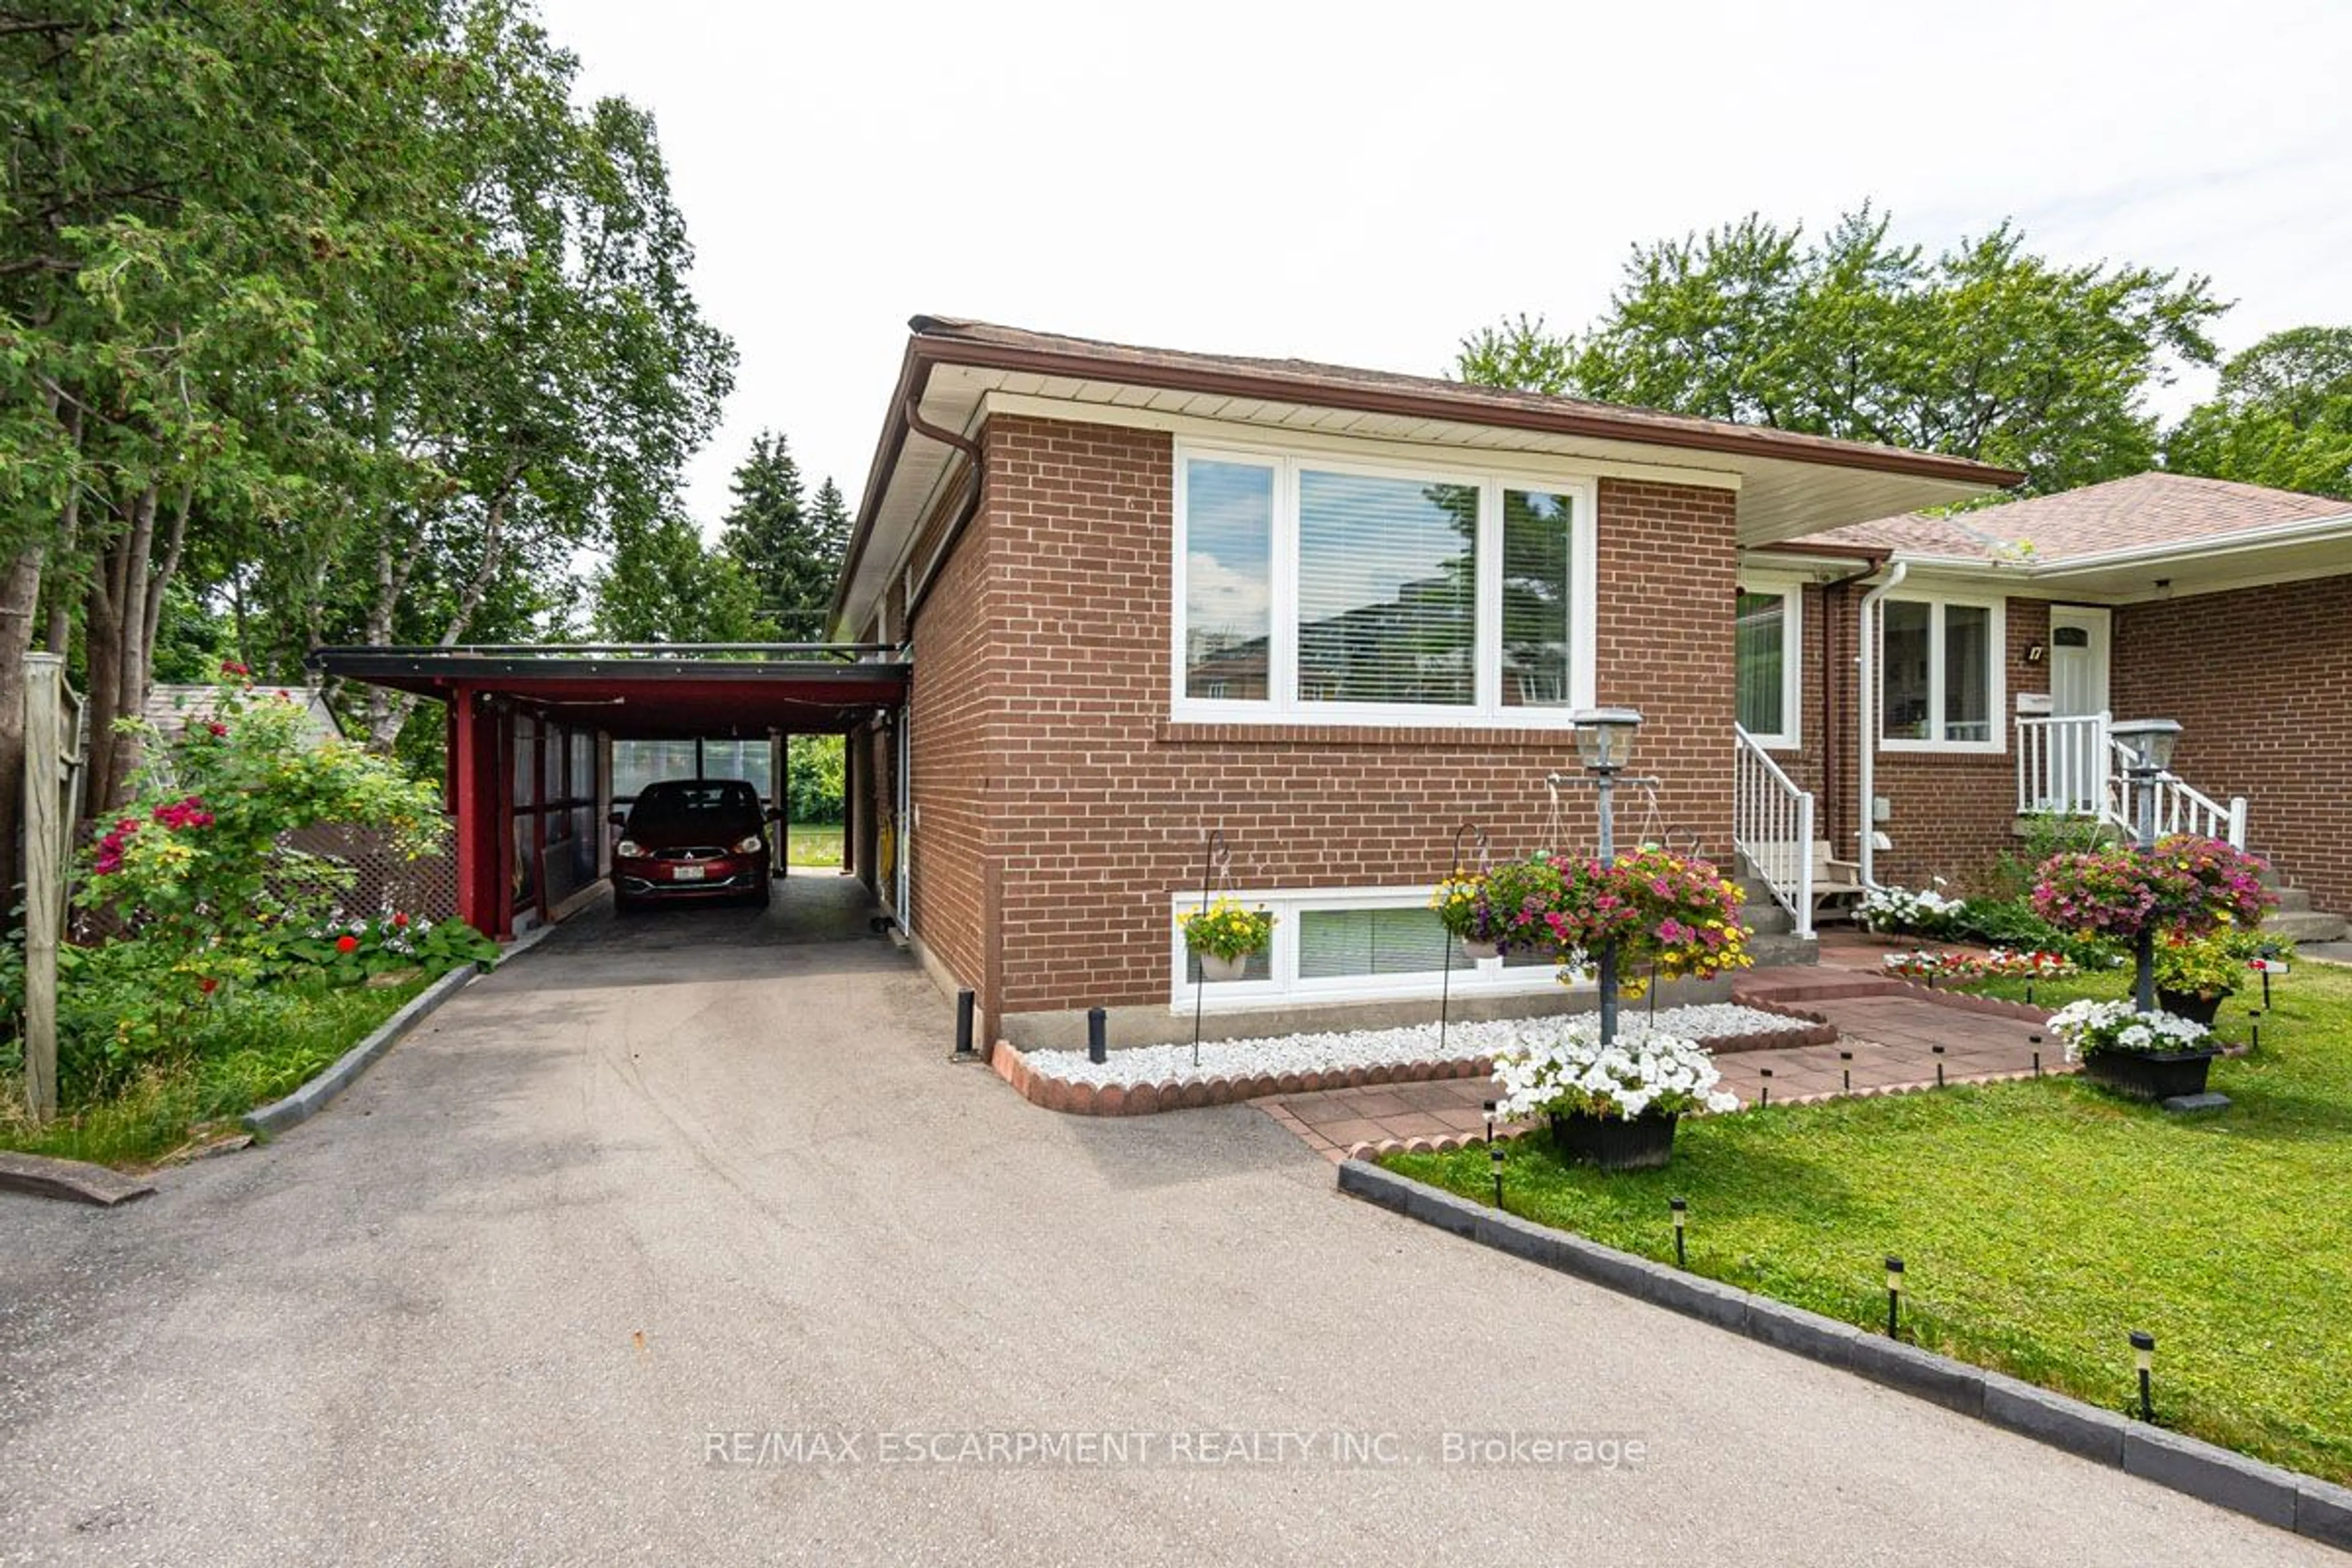 Home with brick exterior material for 15 Gailong Crt, Toronto Ontario M3A 1X7